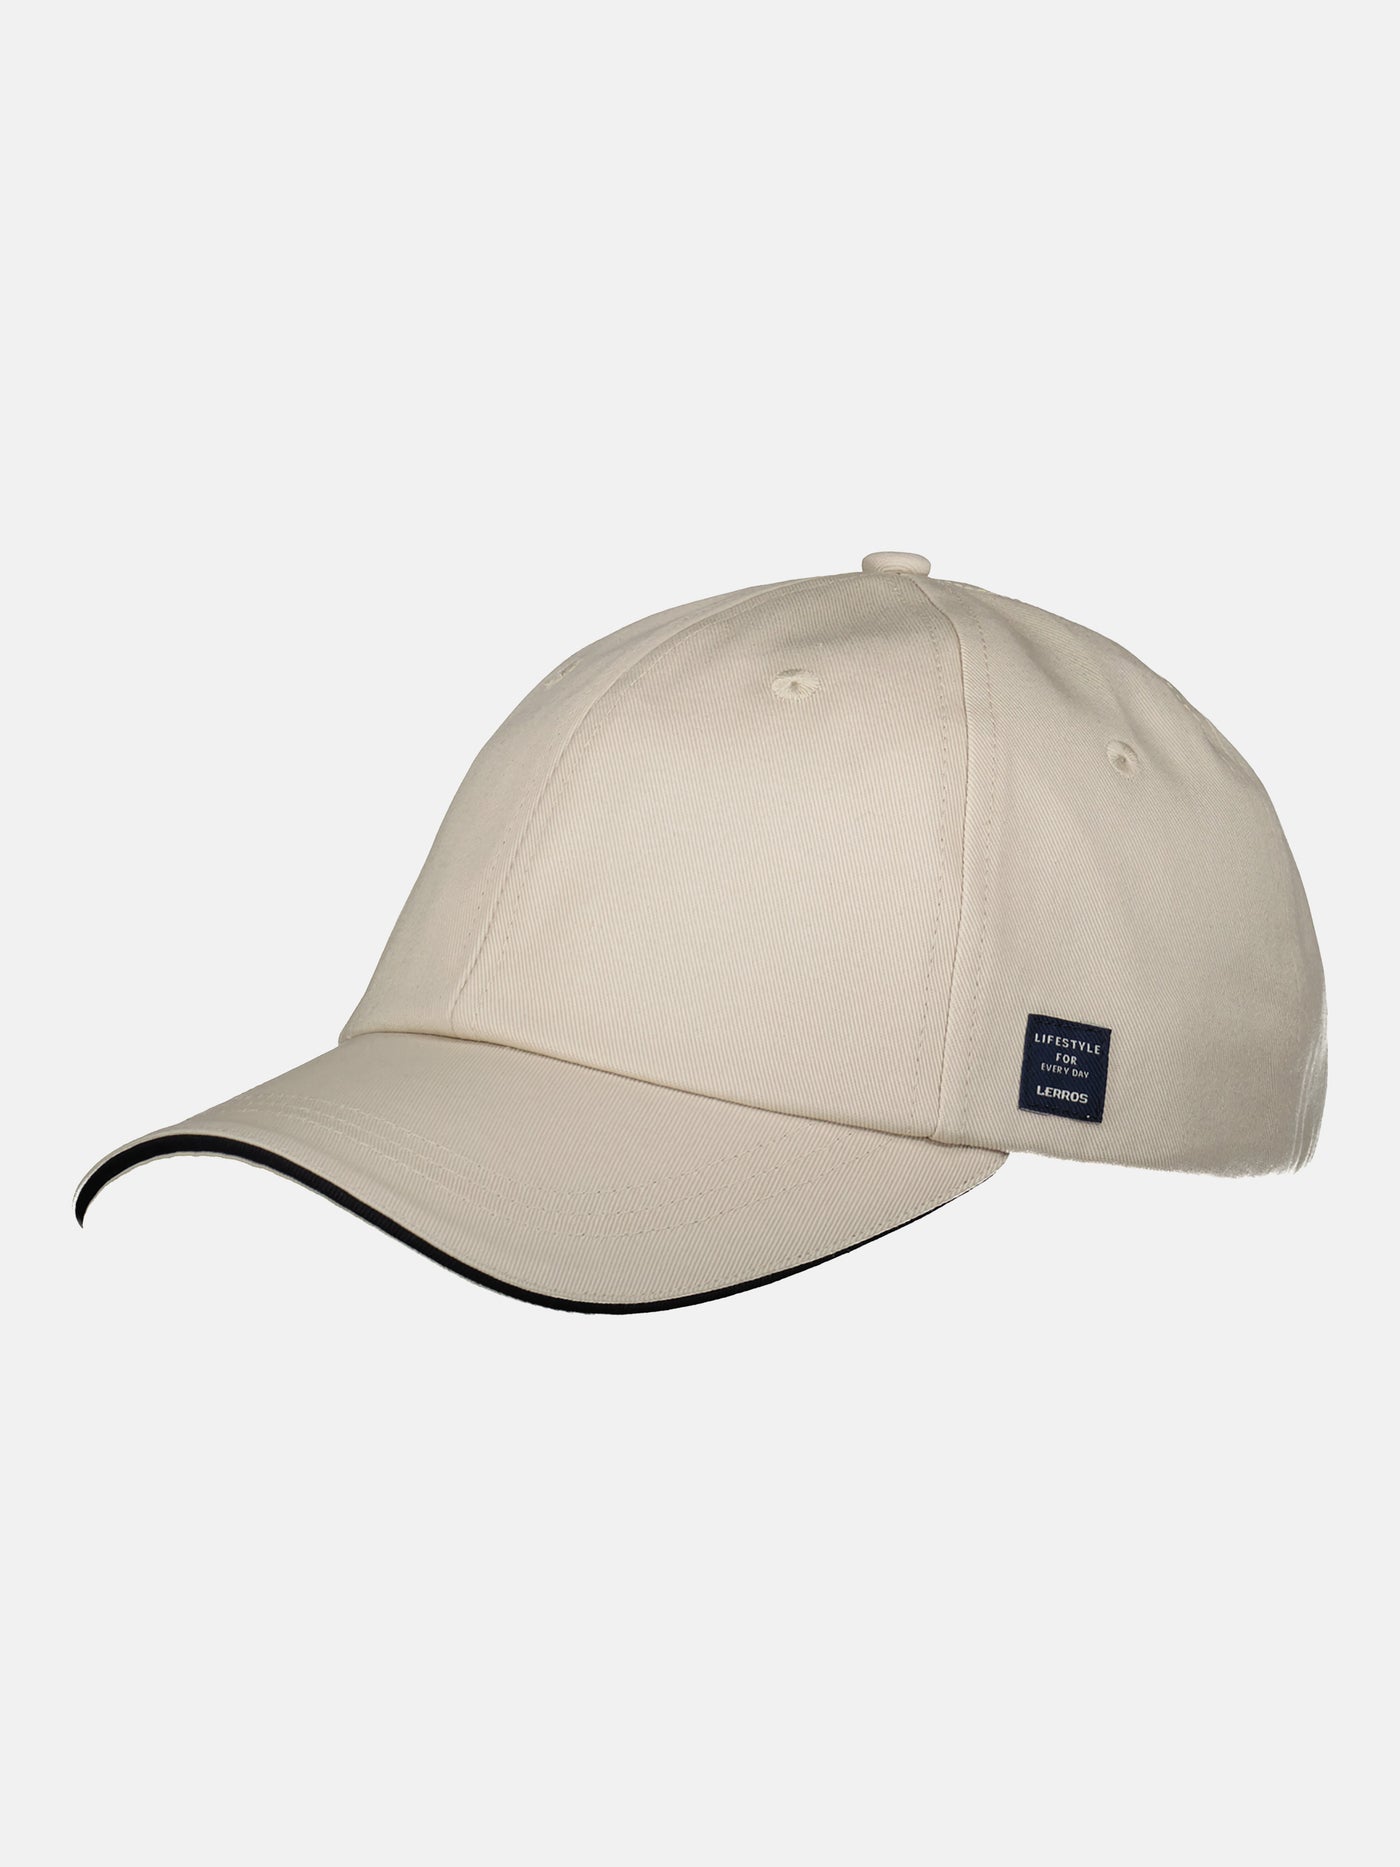 Baseball cap, uni with contrasting inlay